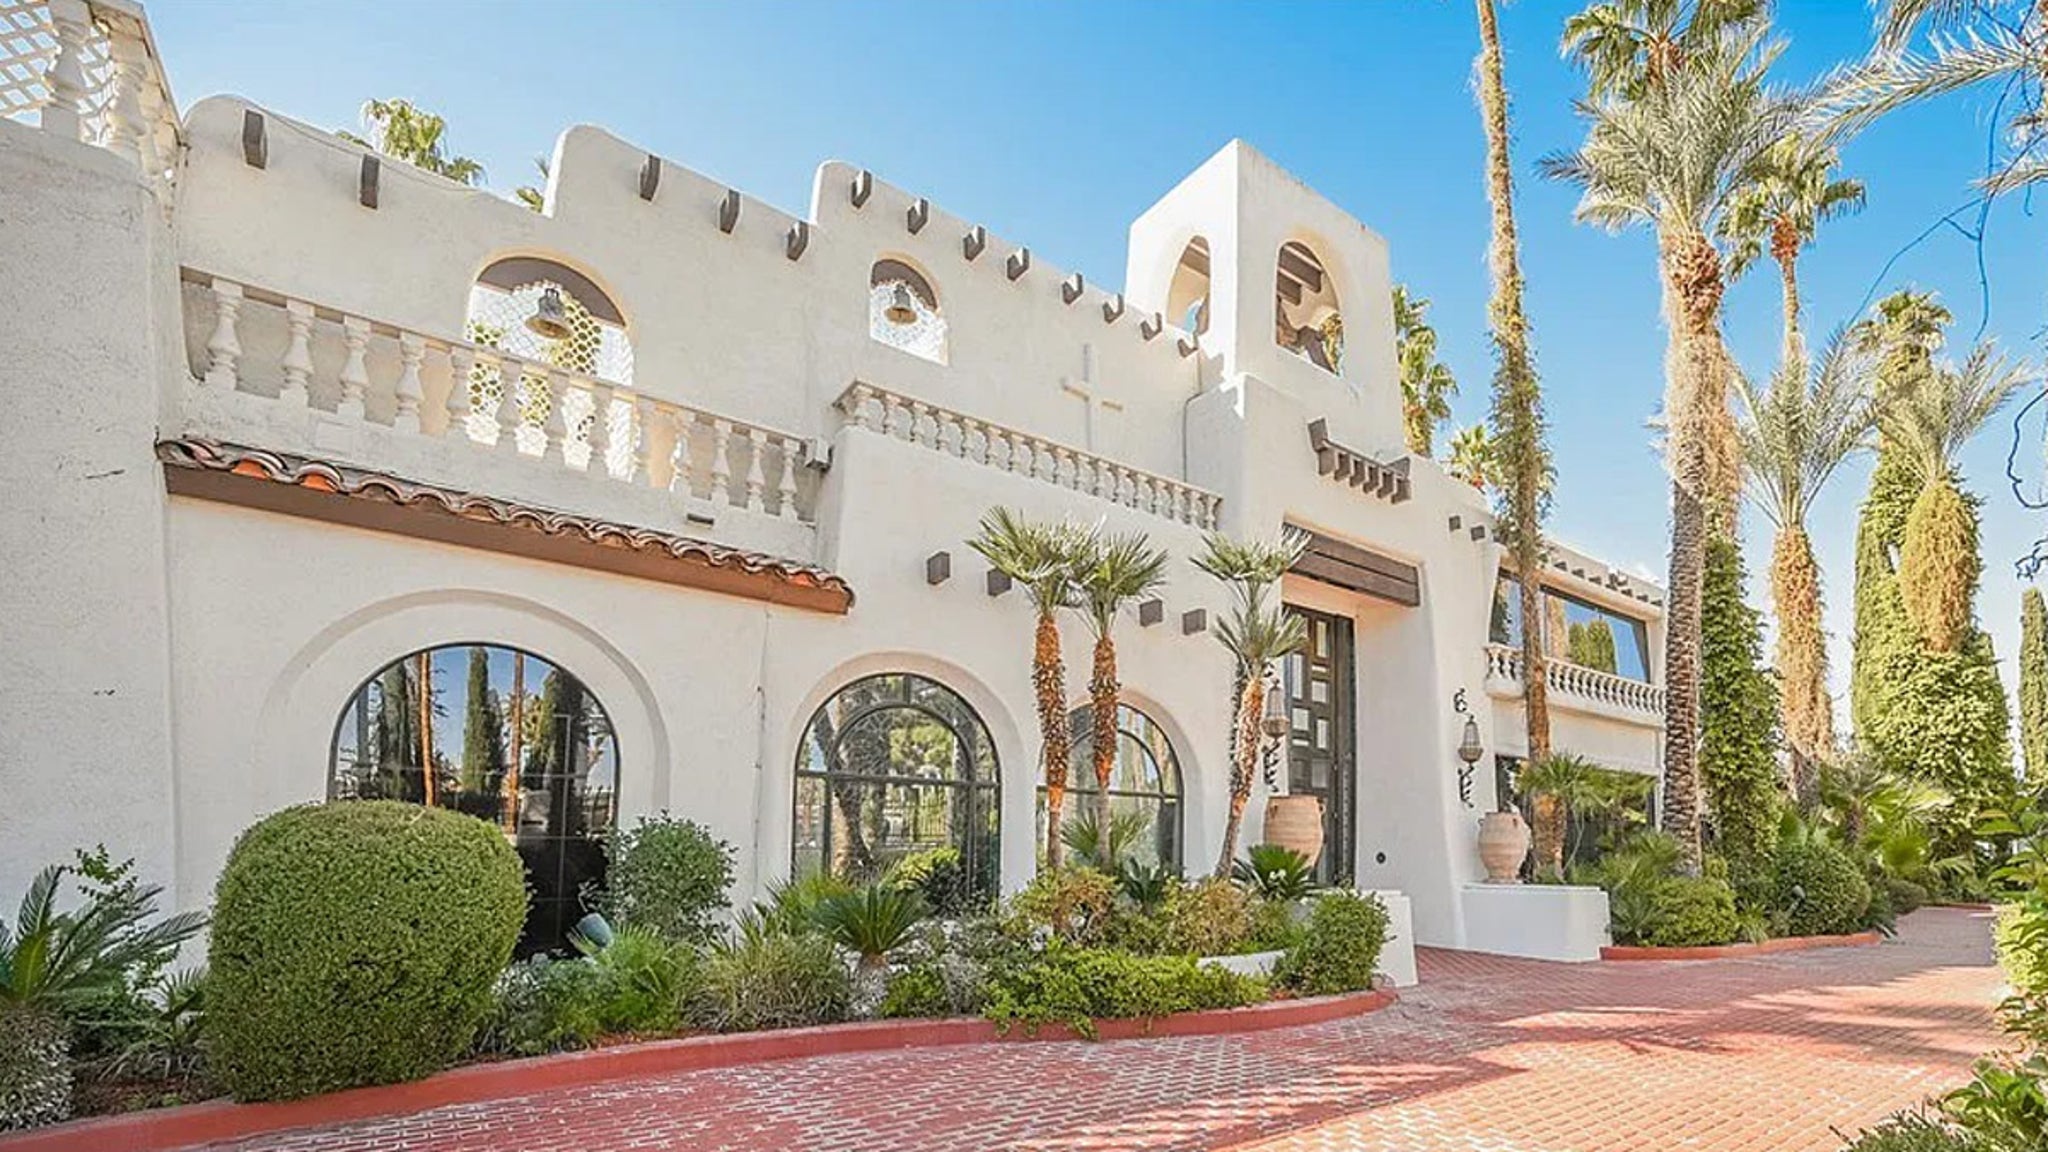 Siegfried & Roy’s Las Vegas ‘Jungle Palace’ Mansion For Sale At  Million